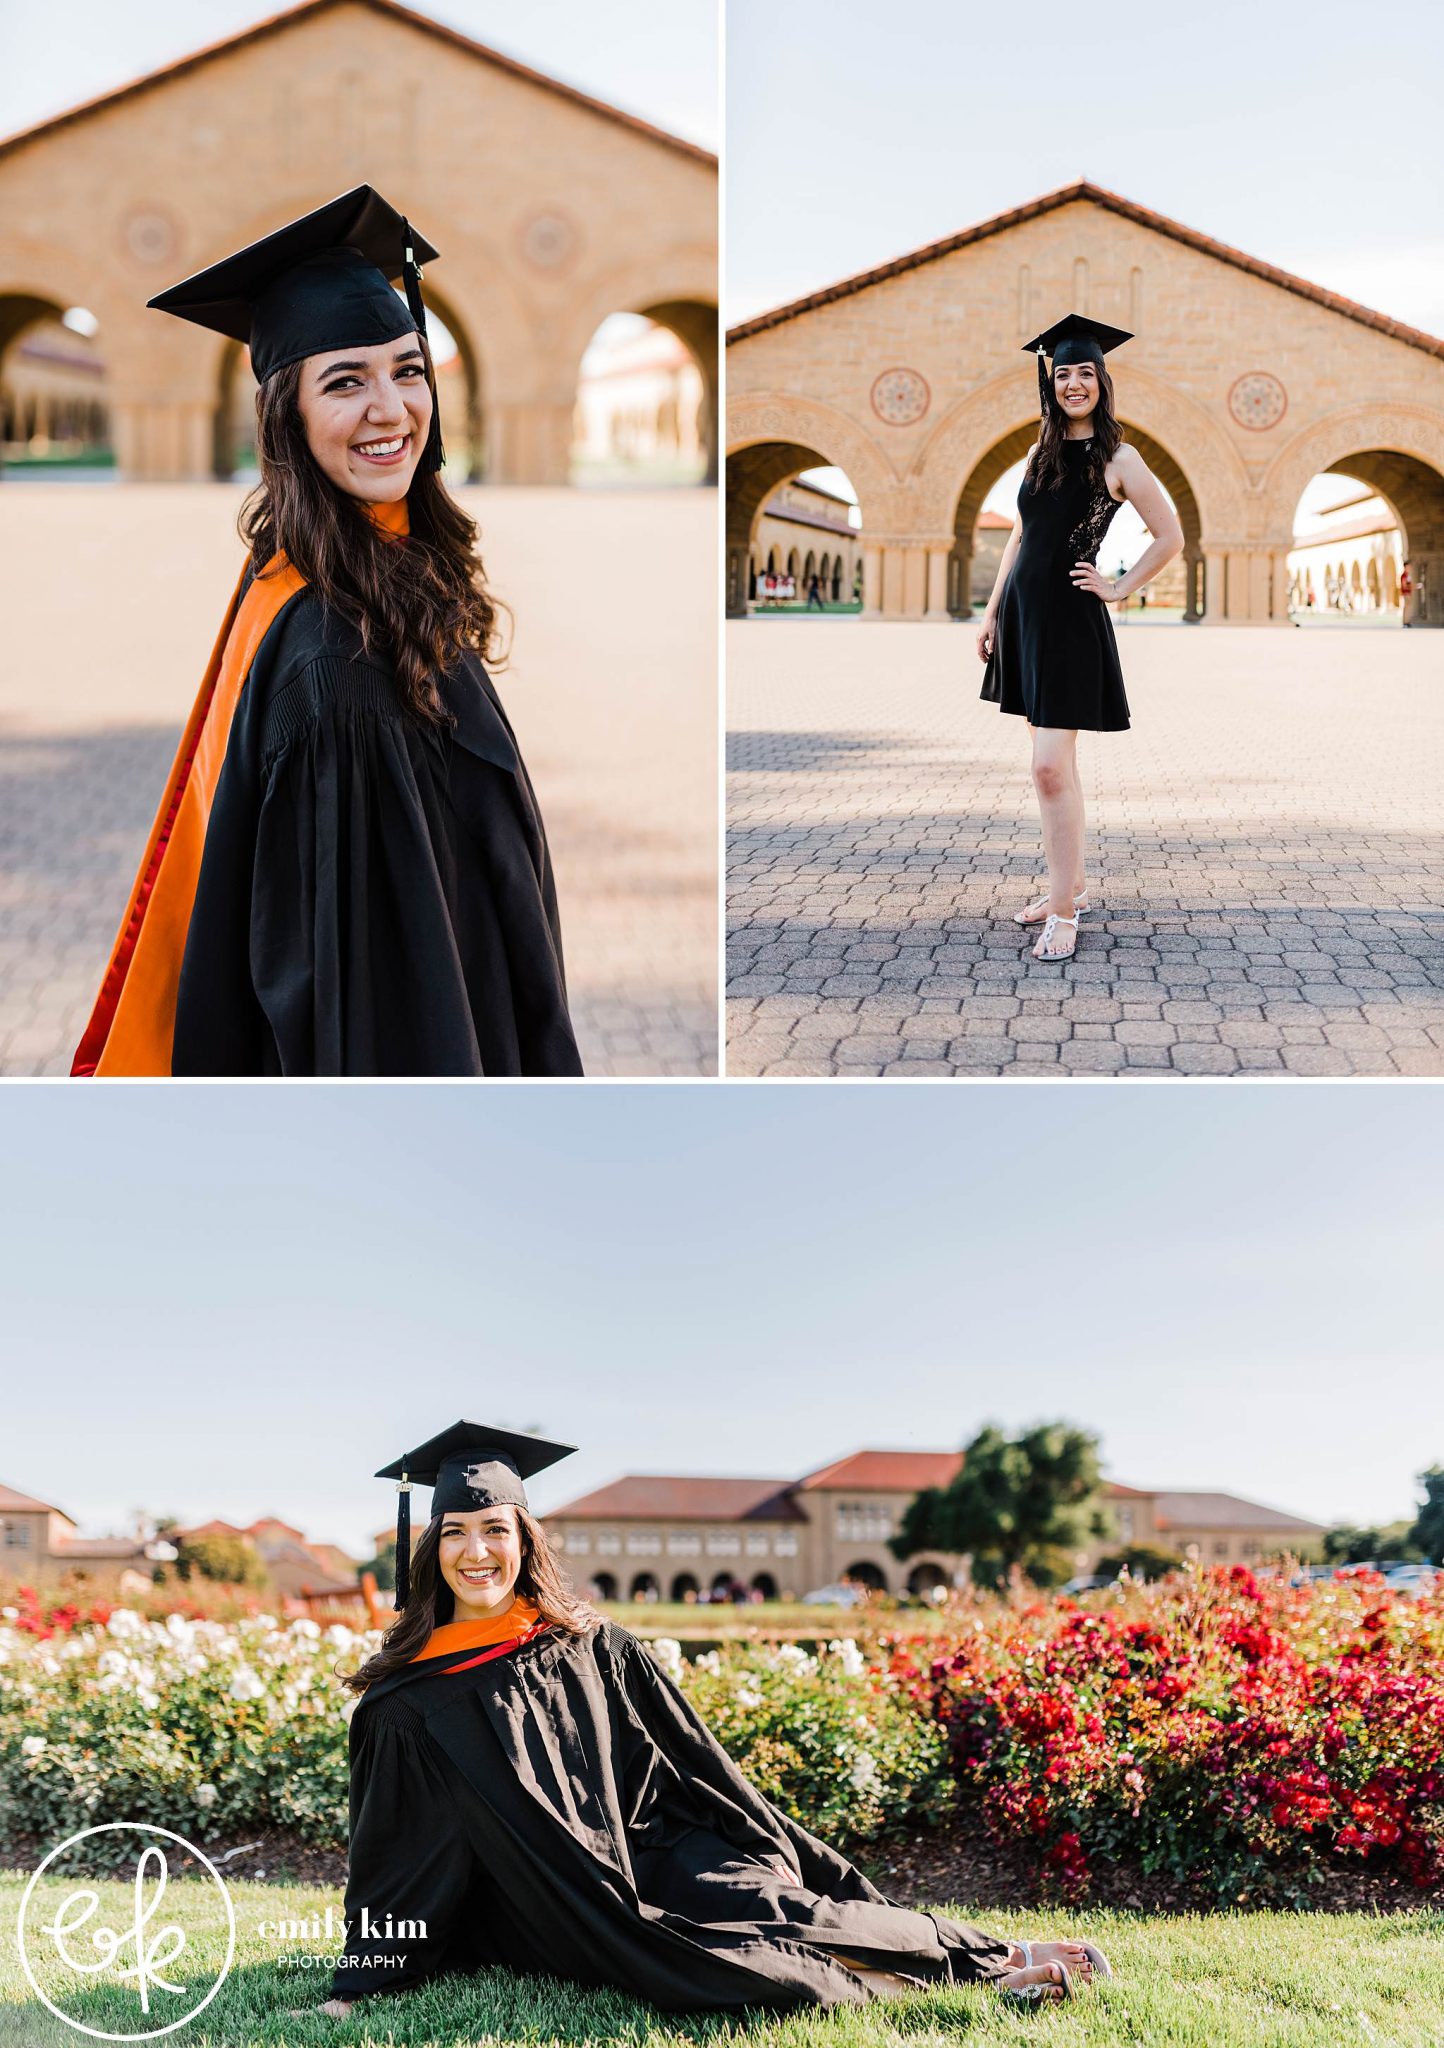 Stanford graduation session with Disney grad cap